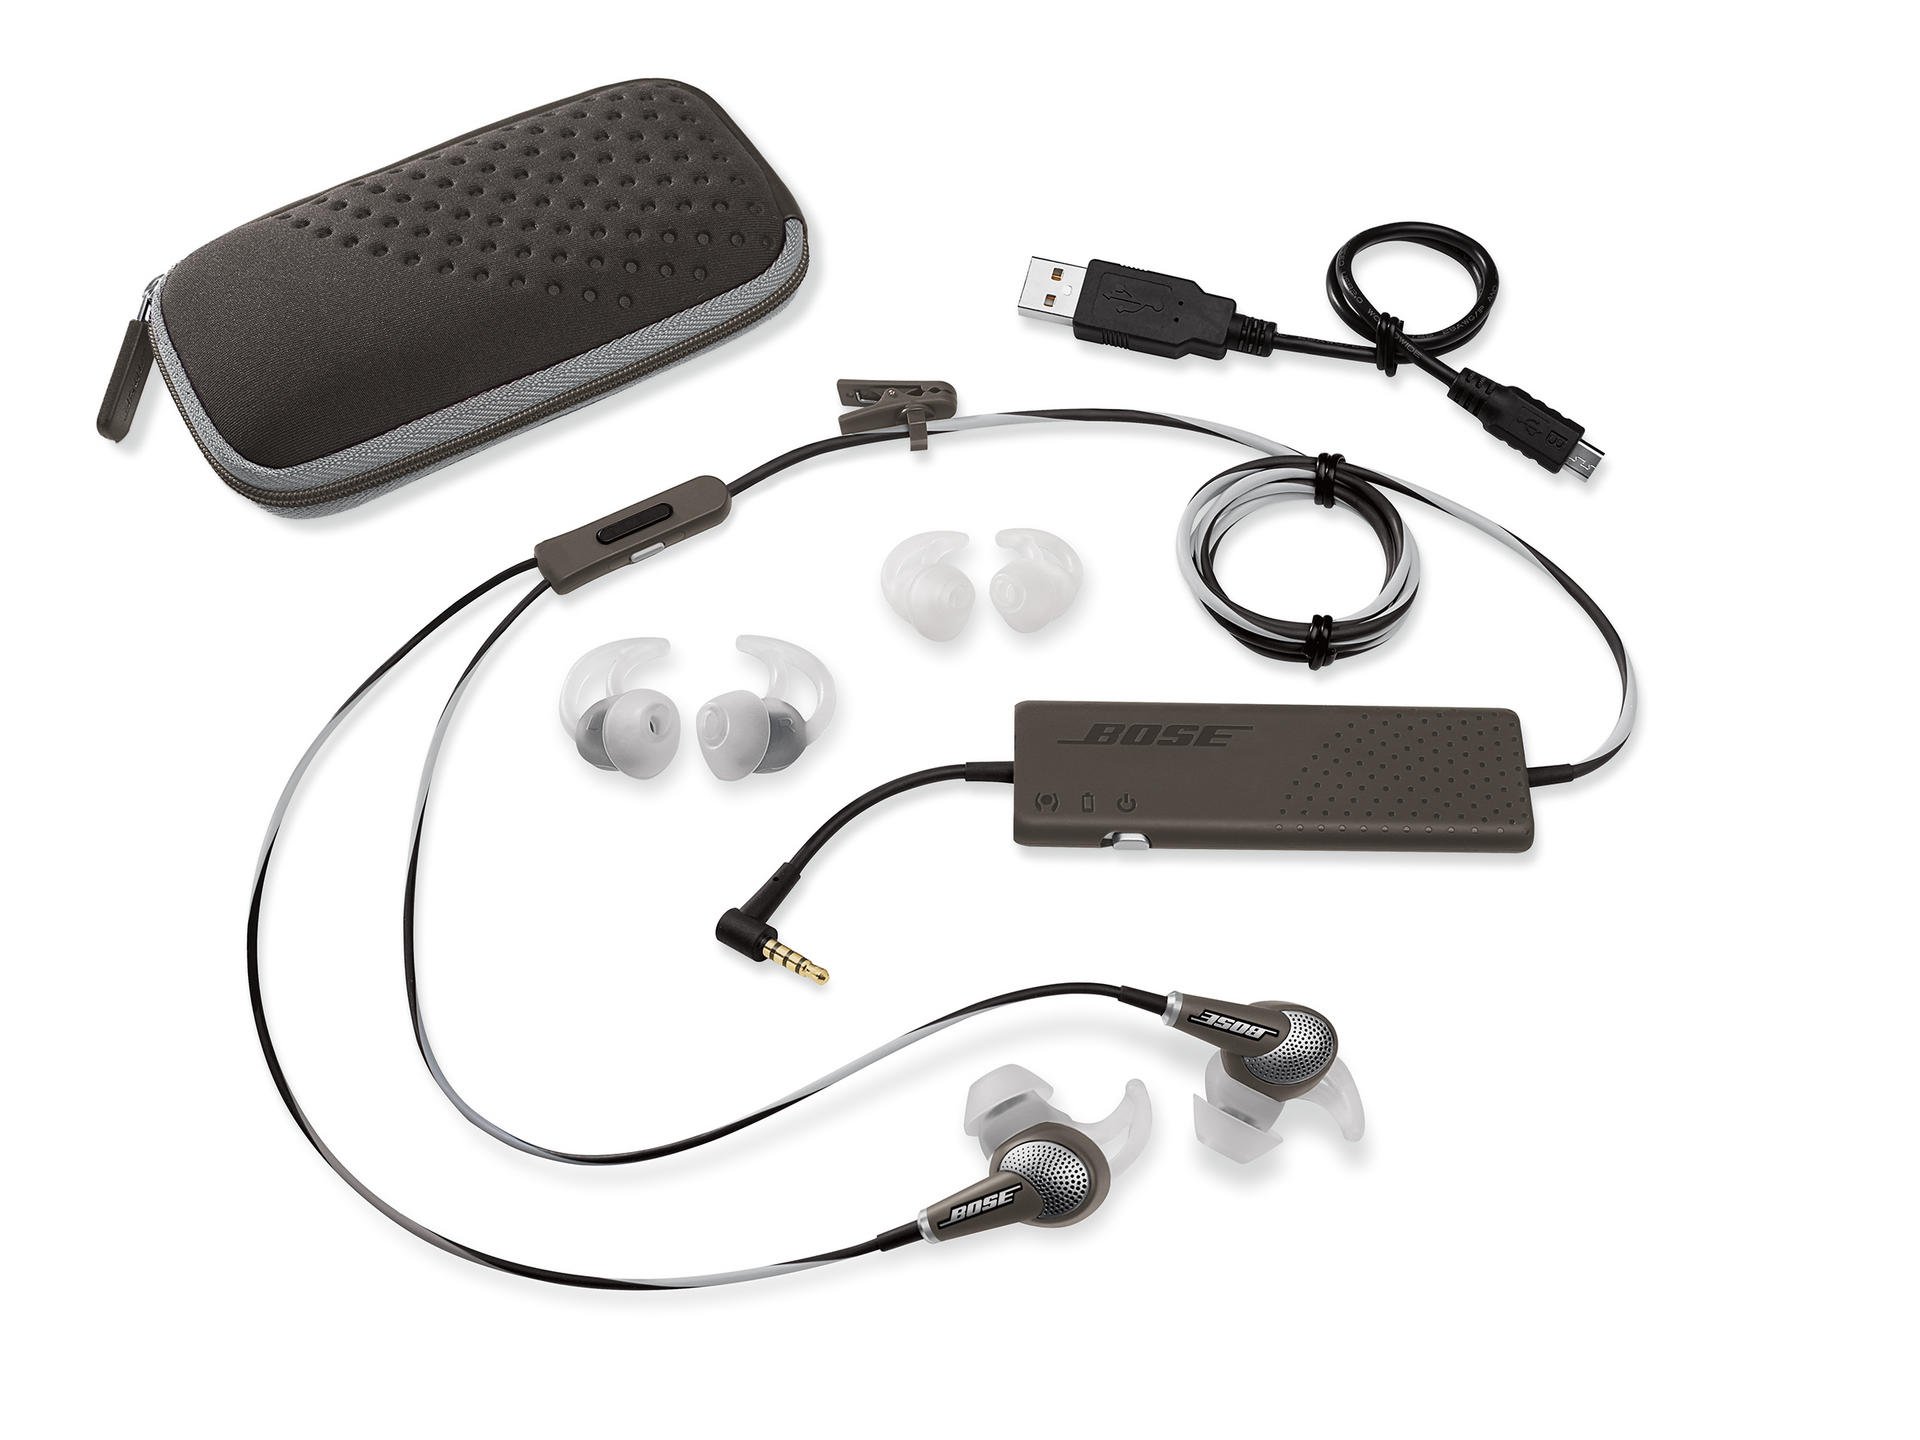 The Bose QuietComfort 20 headphones and accessories.